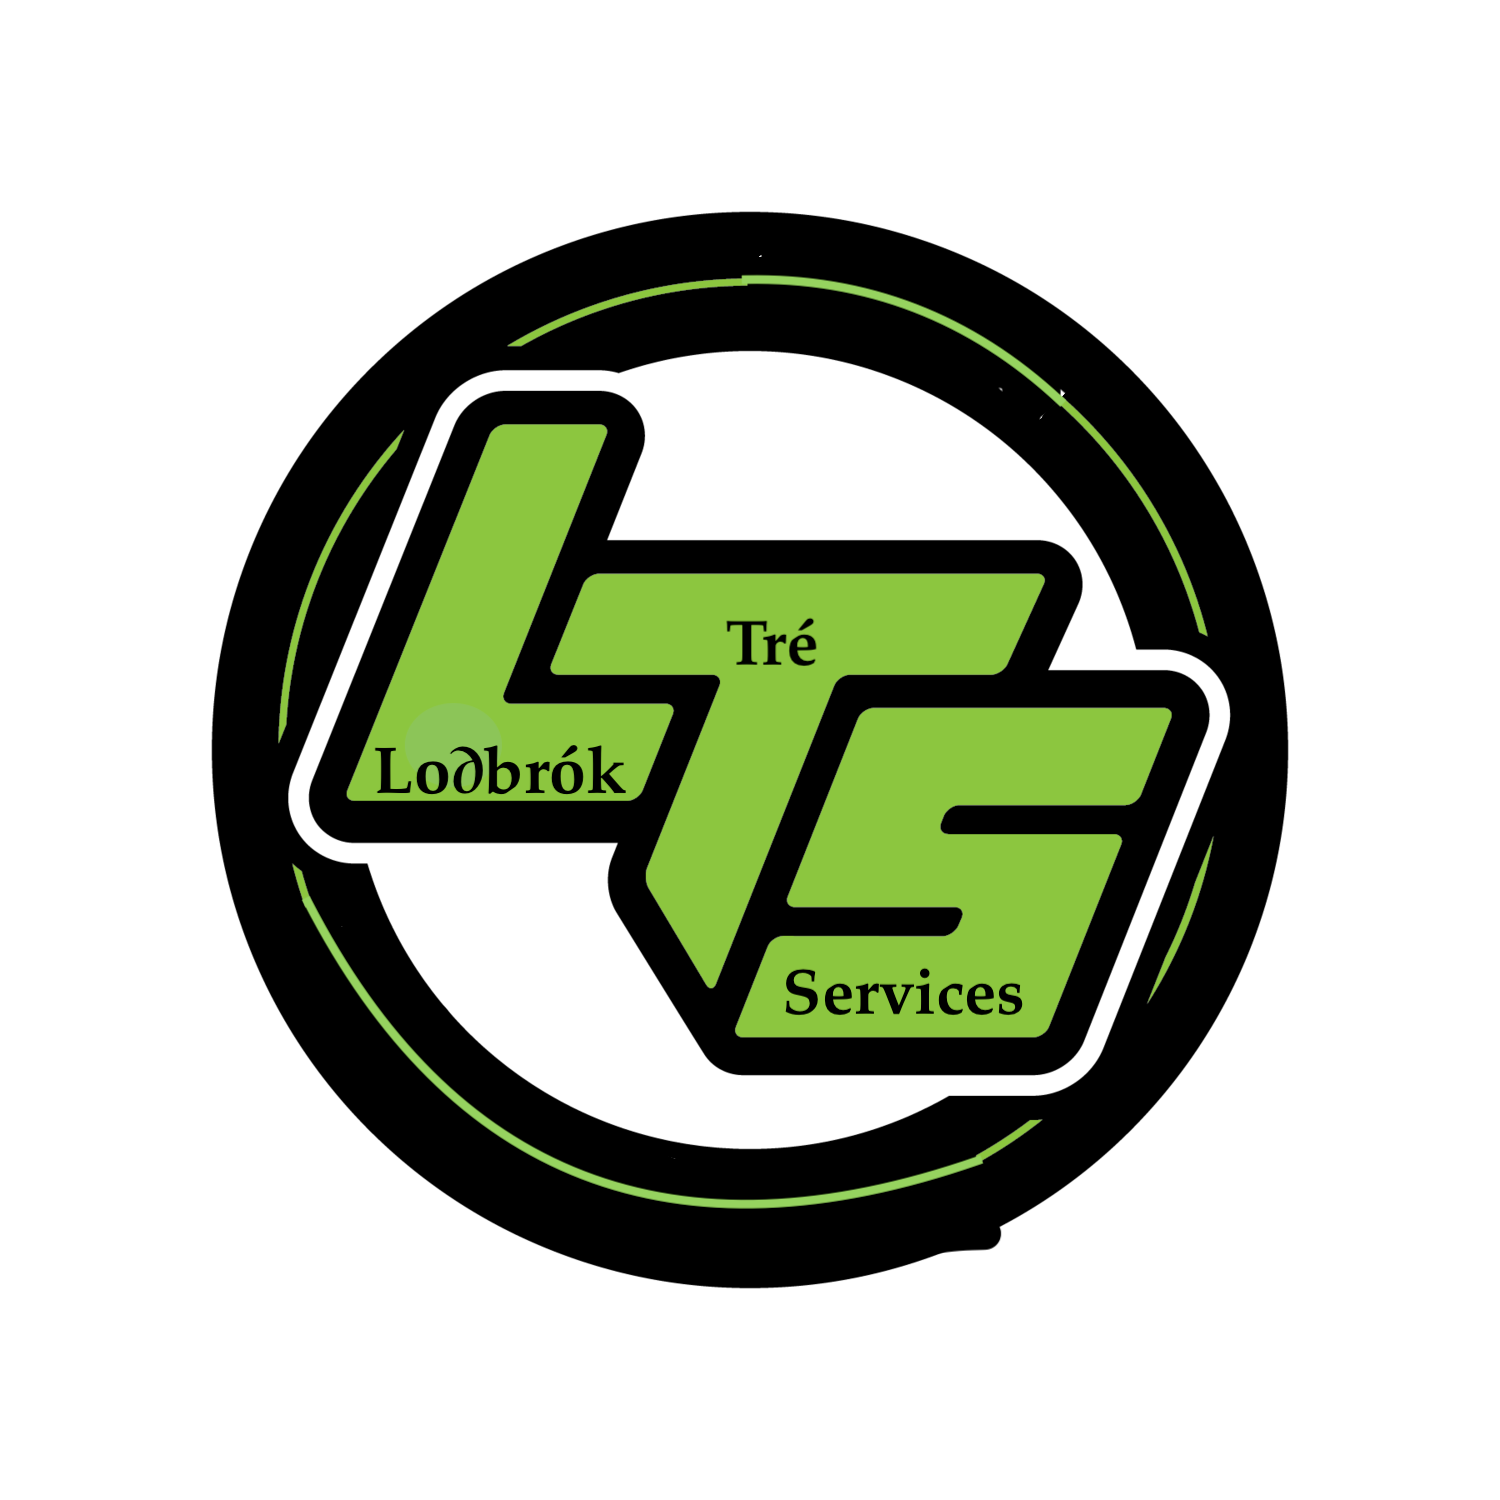 Lothbrook Tré Service Logo